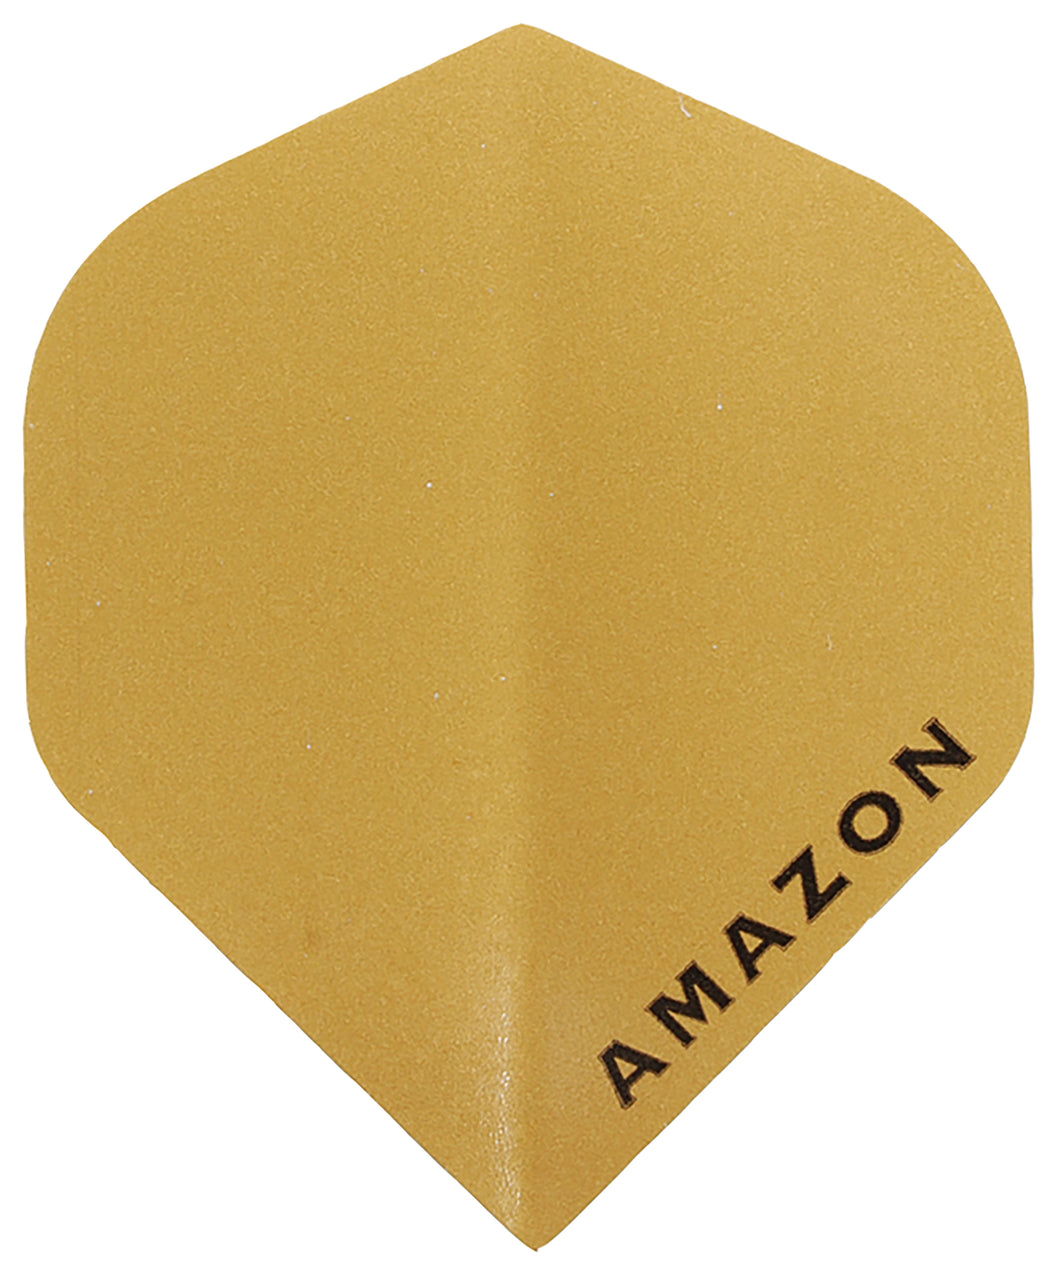 Amazon Gold Standard Shape Flights